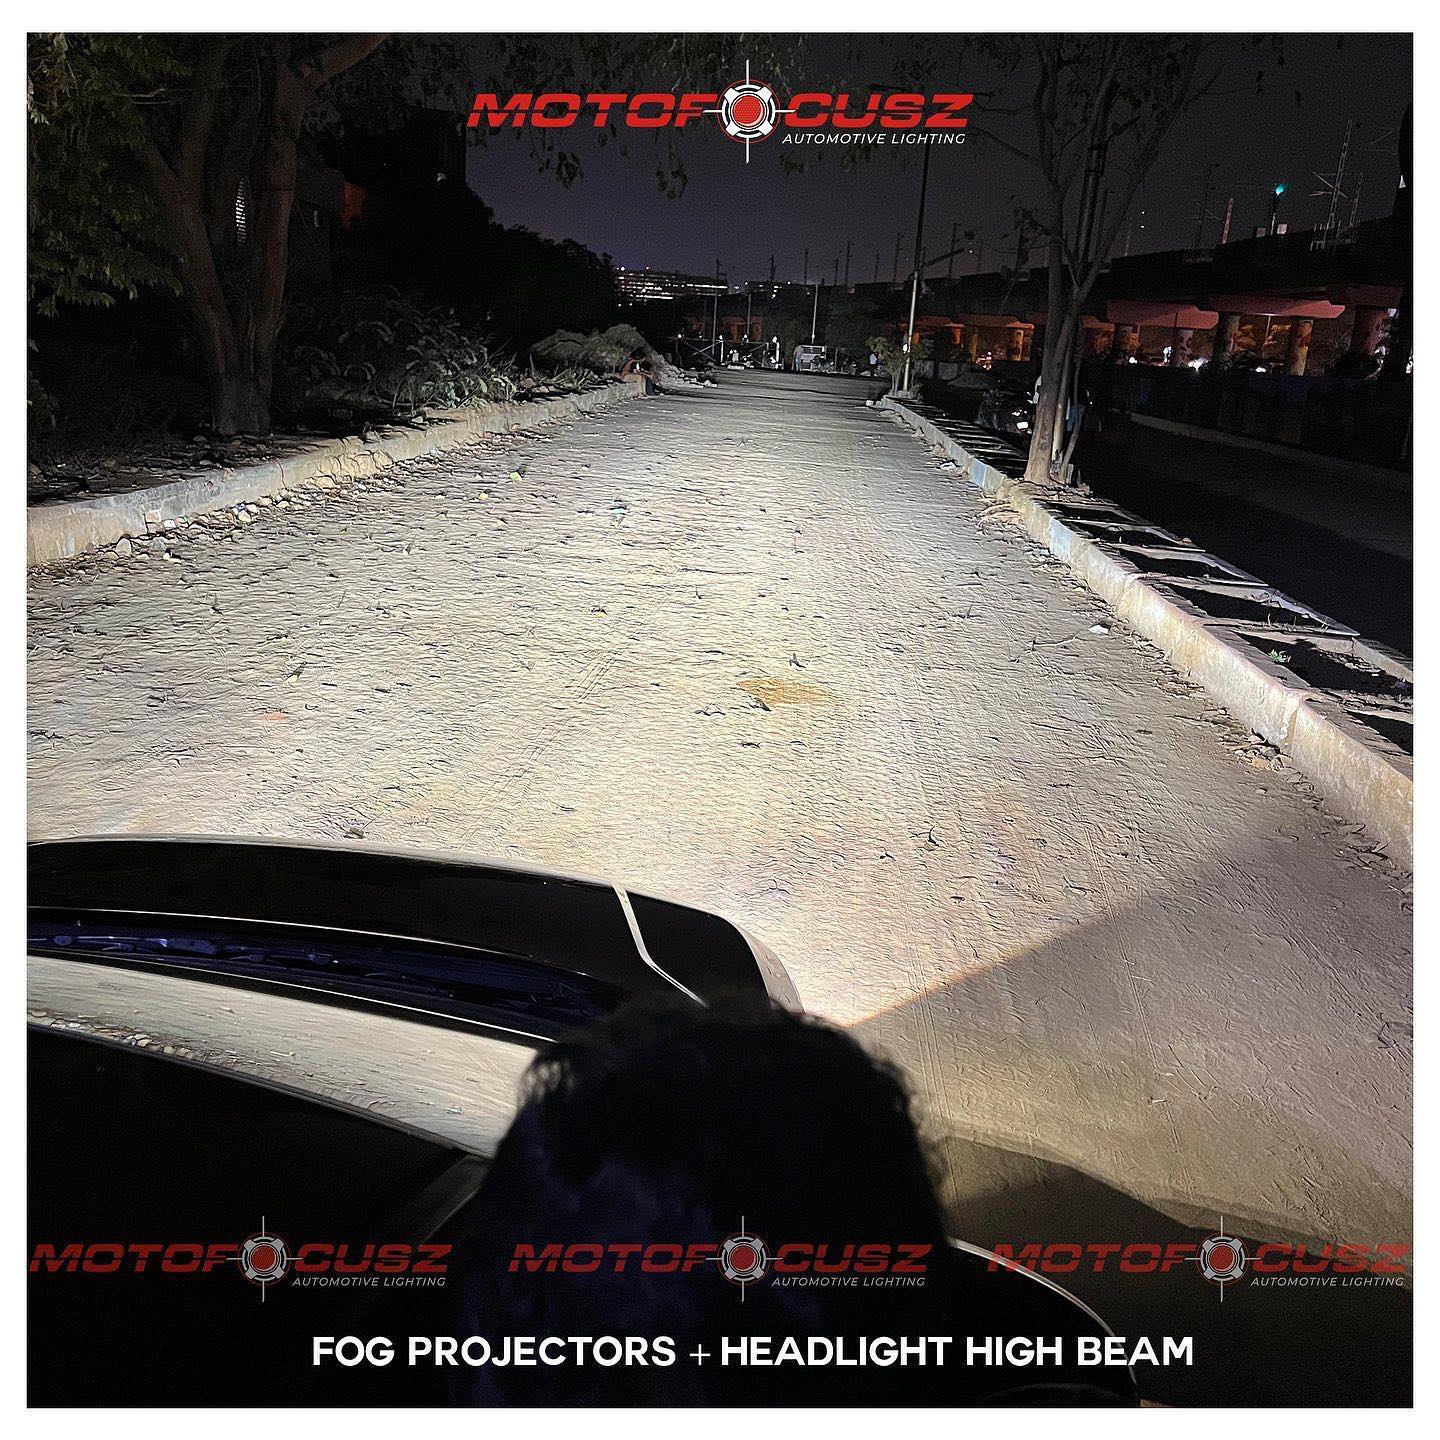 Honda city in for 3â€� Bi-xenon fog projectors upgrade from Motofocusz Best Headlight customisation in Chennai